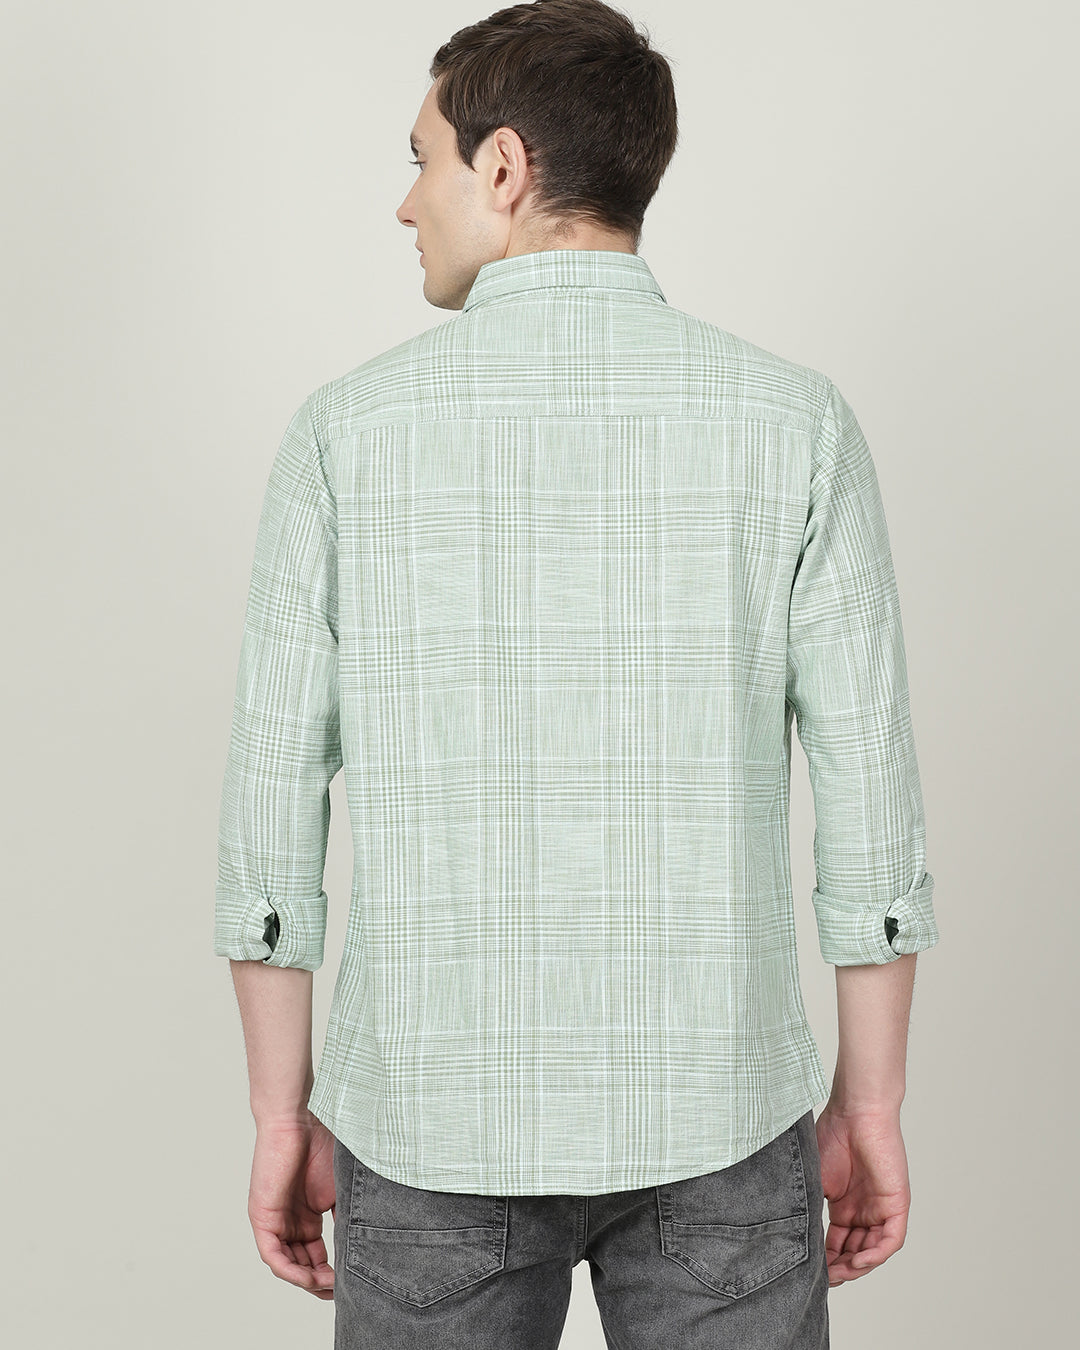 Crocodile Men's Full Sleeve Comfort Fit Shirt Online